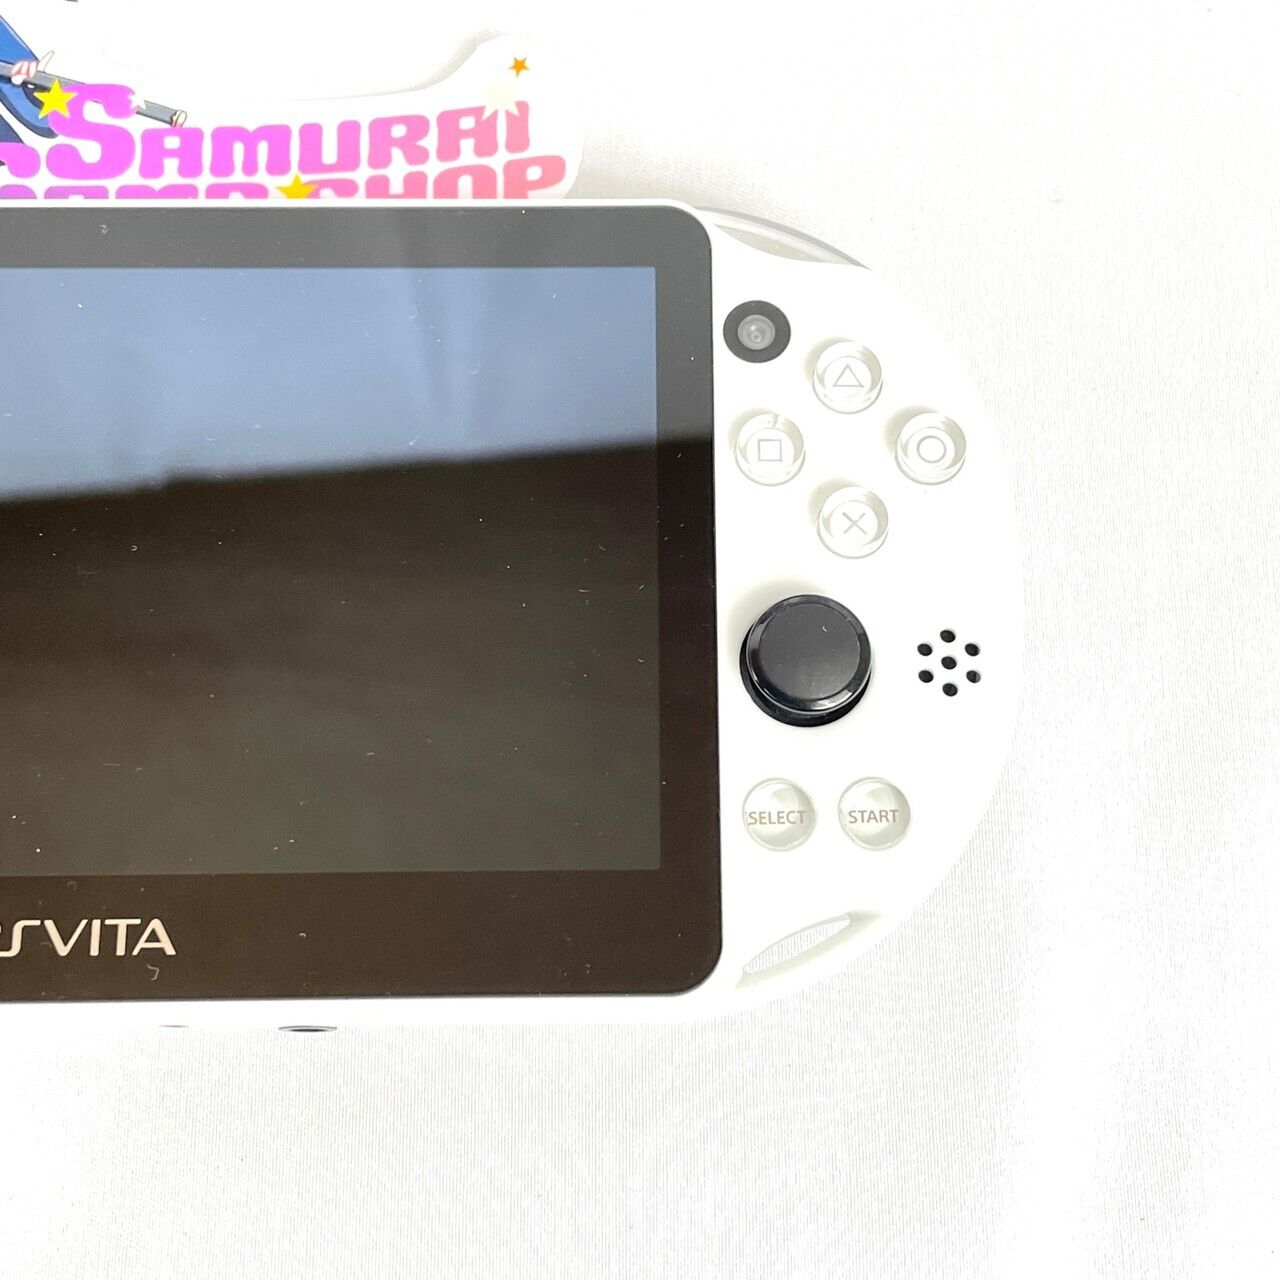 PlayStation Vita PCH-2000 review